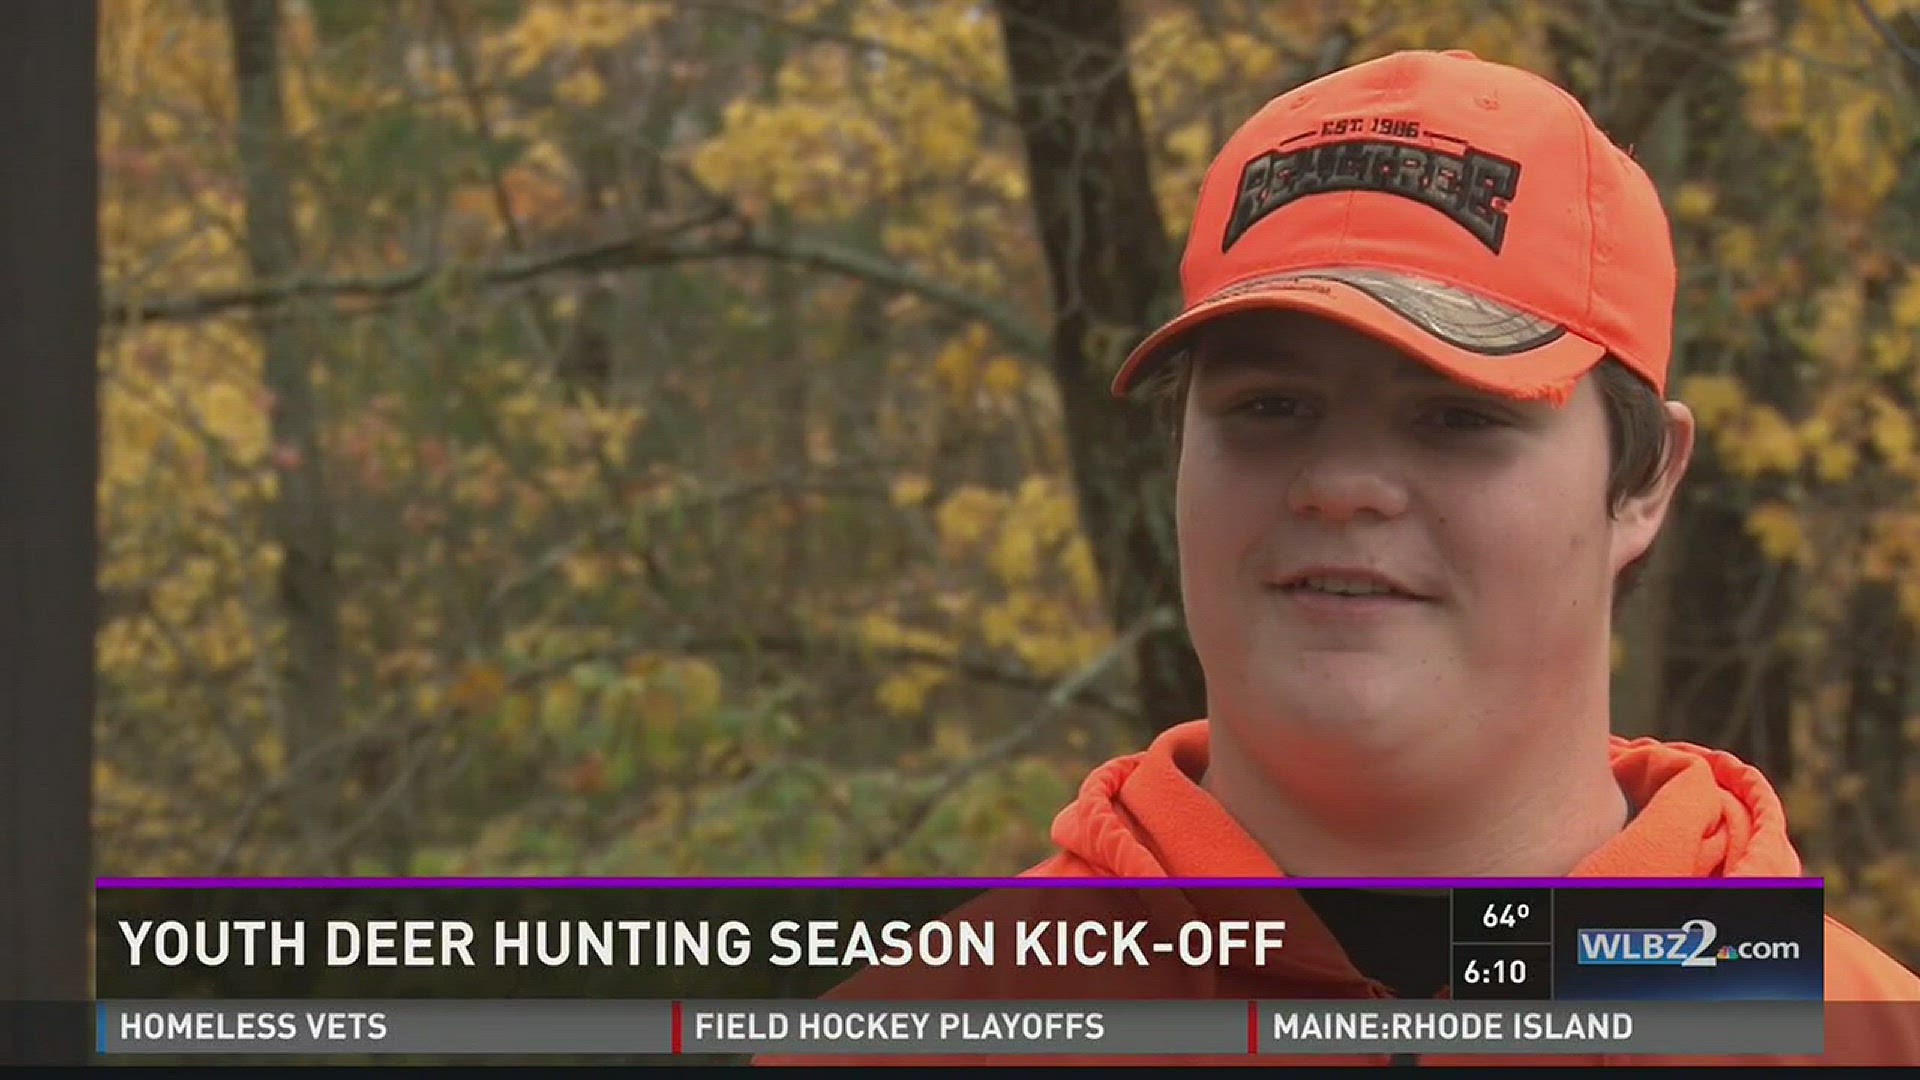 Youth hunting day kicks off Maine's hunting season